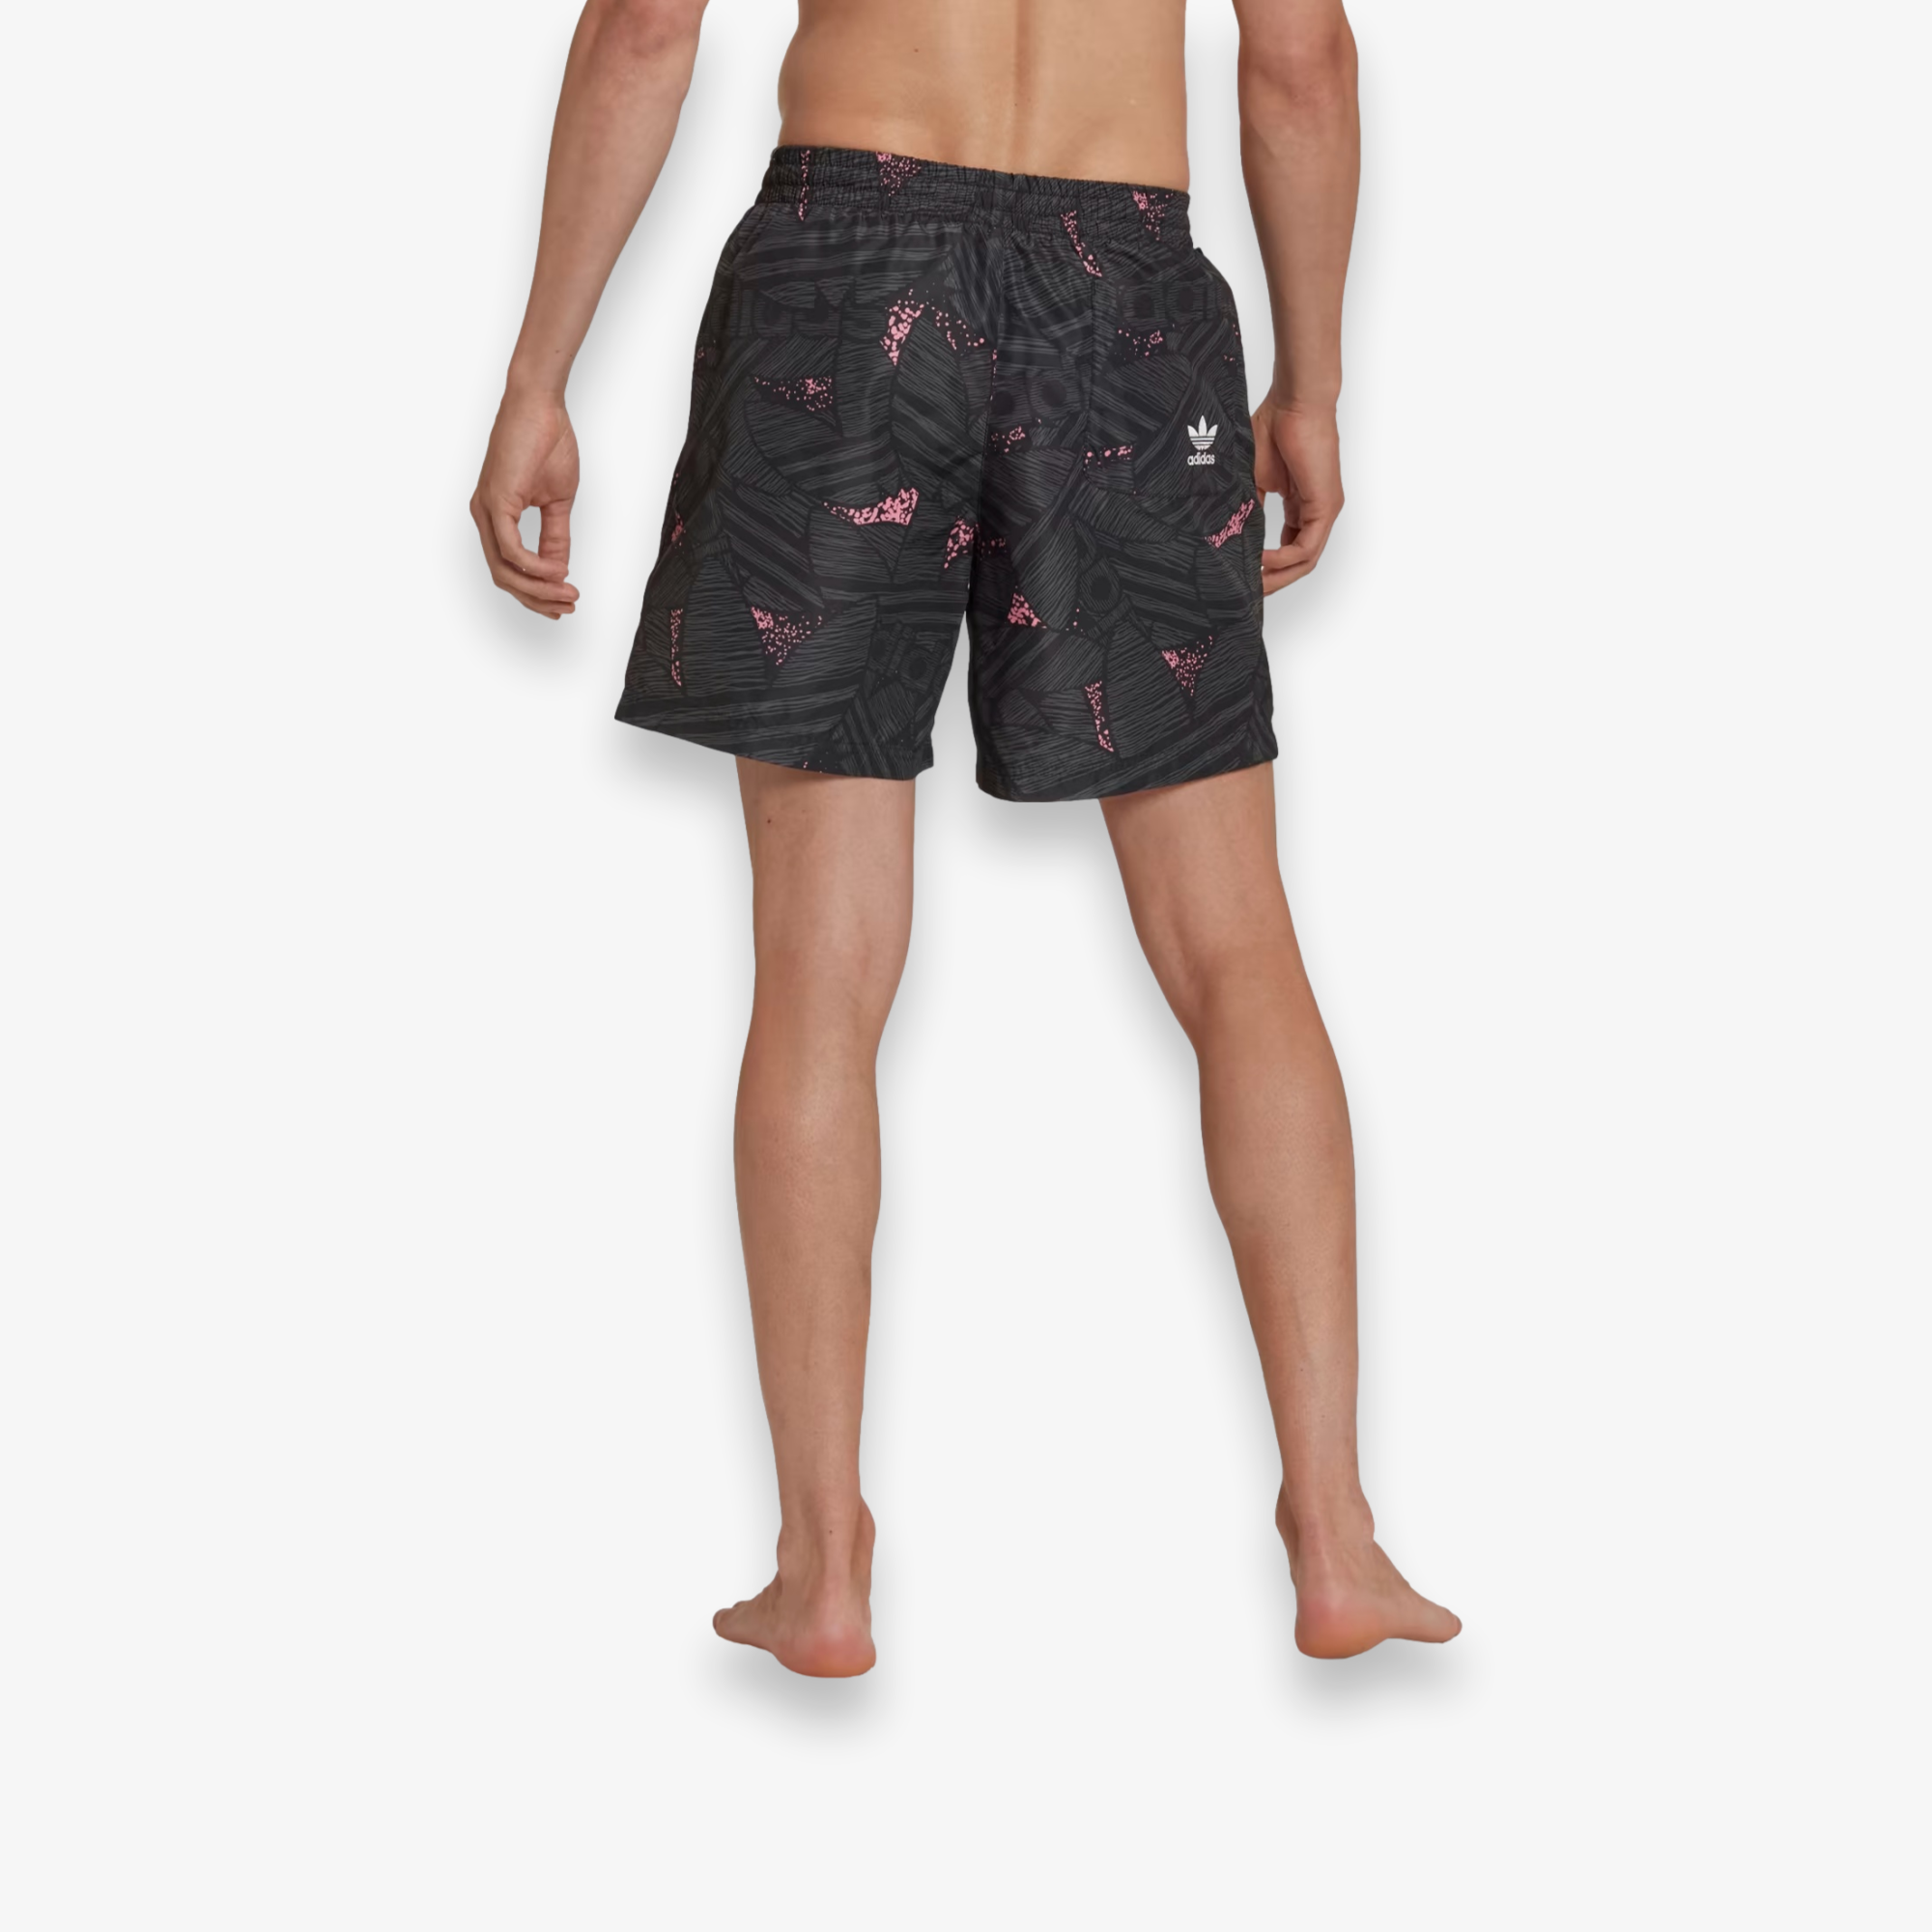 Rekive Allover Print Swim Shorts